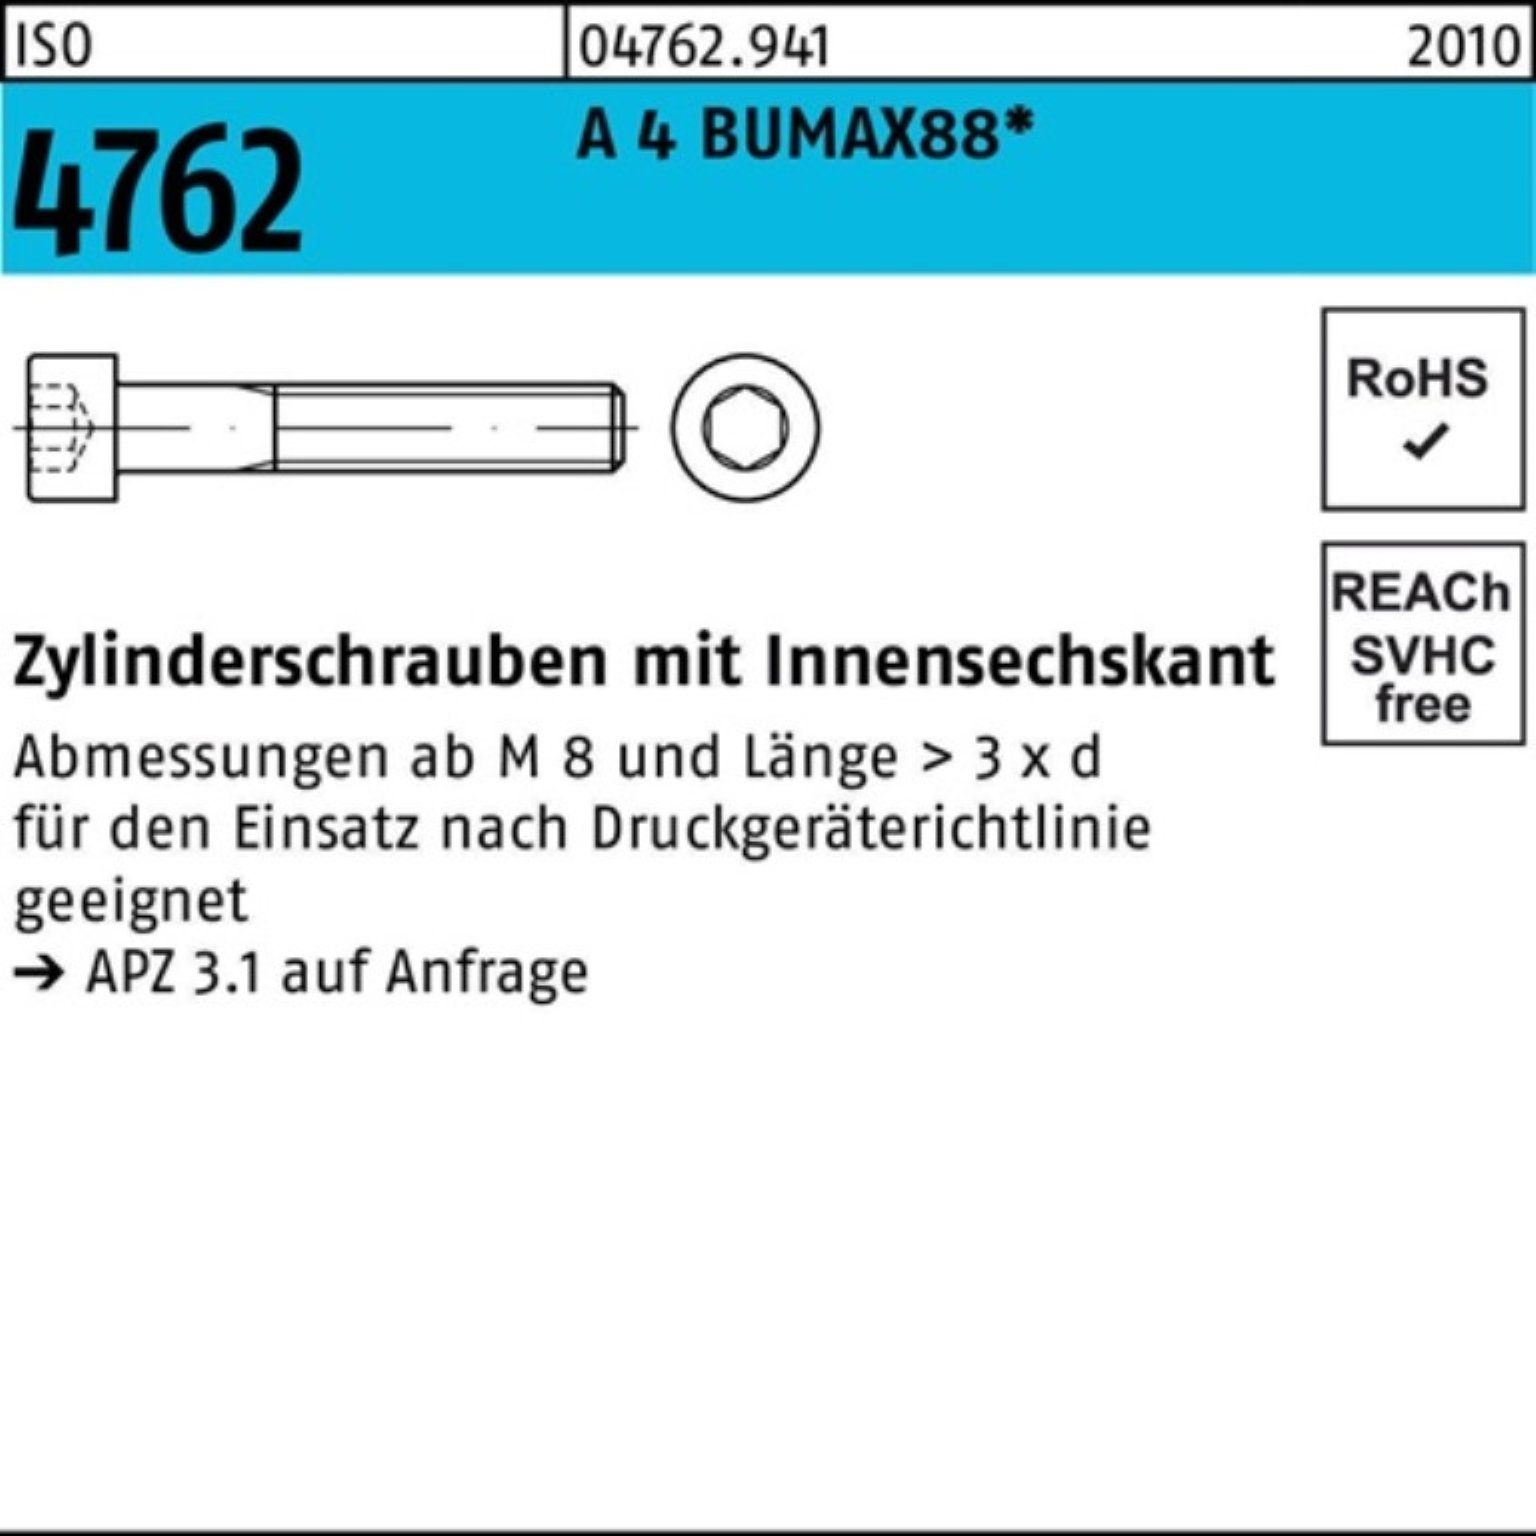 Bufab Zylinderschraube 500er Pack Zylinderschraube ISO 4762 Innen-6kt M3x 6 A 4 BUMAX88 500 S